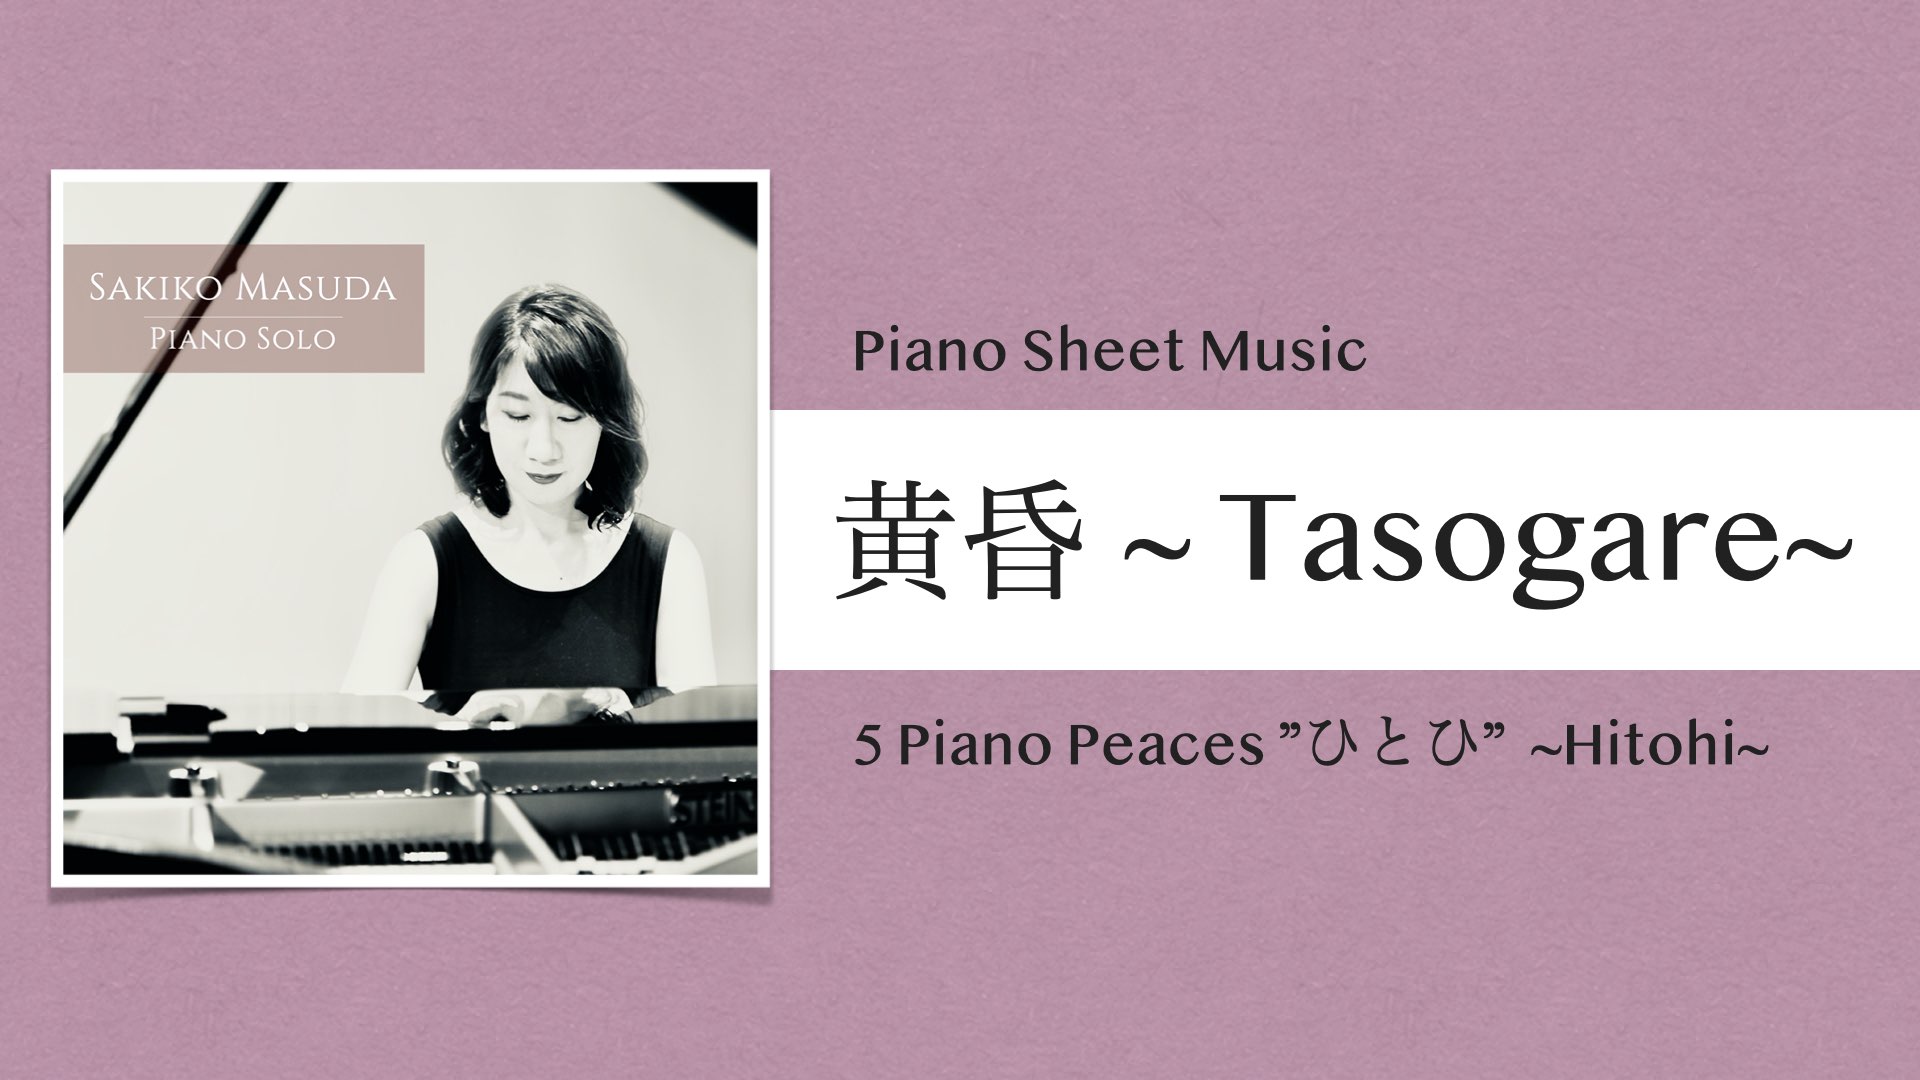 Tasogare from 5 Piano Peaces "Hitohi"【Piano Sheet Music】